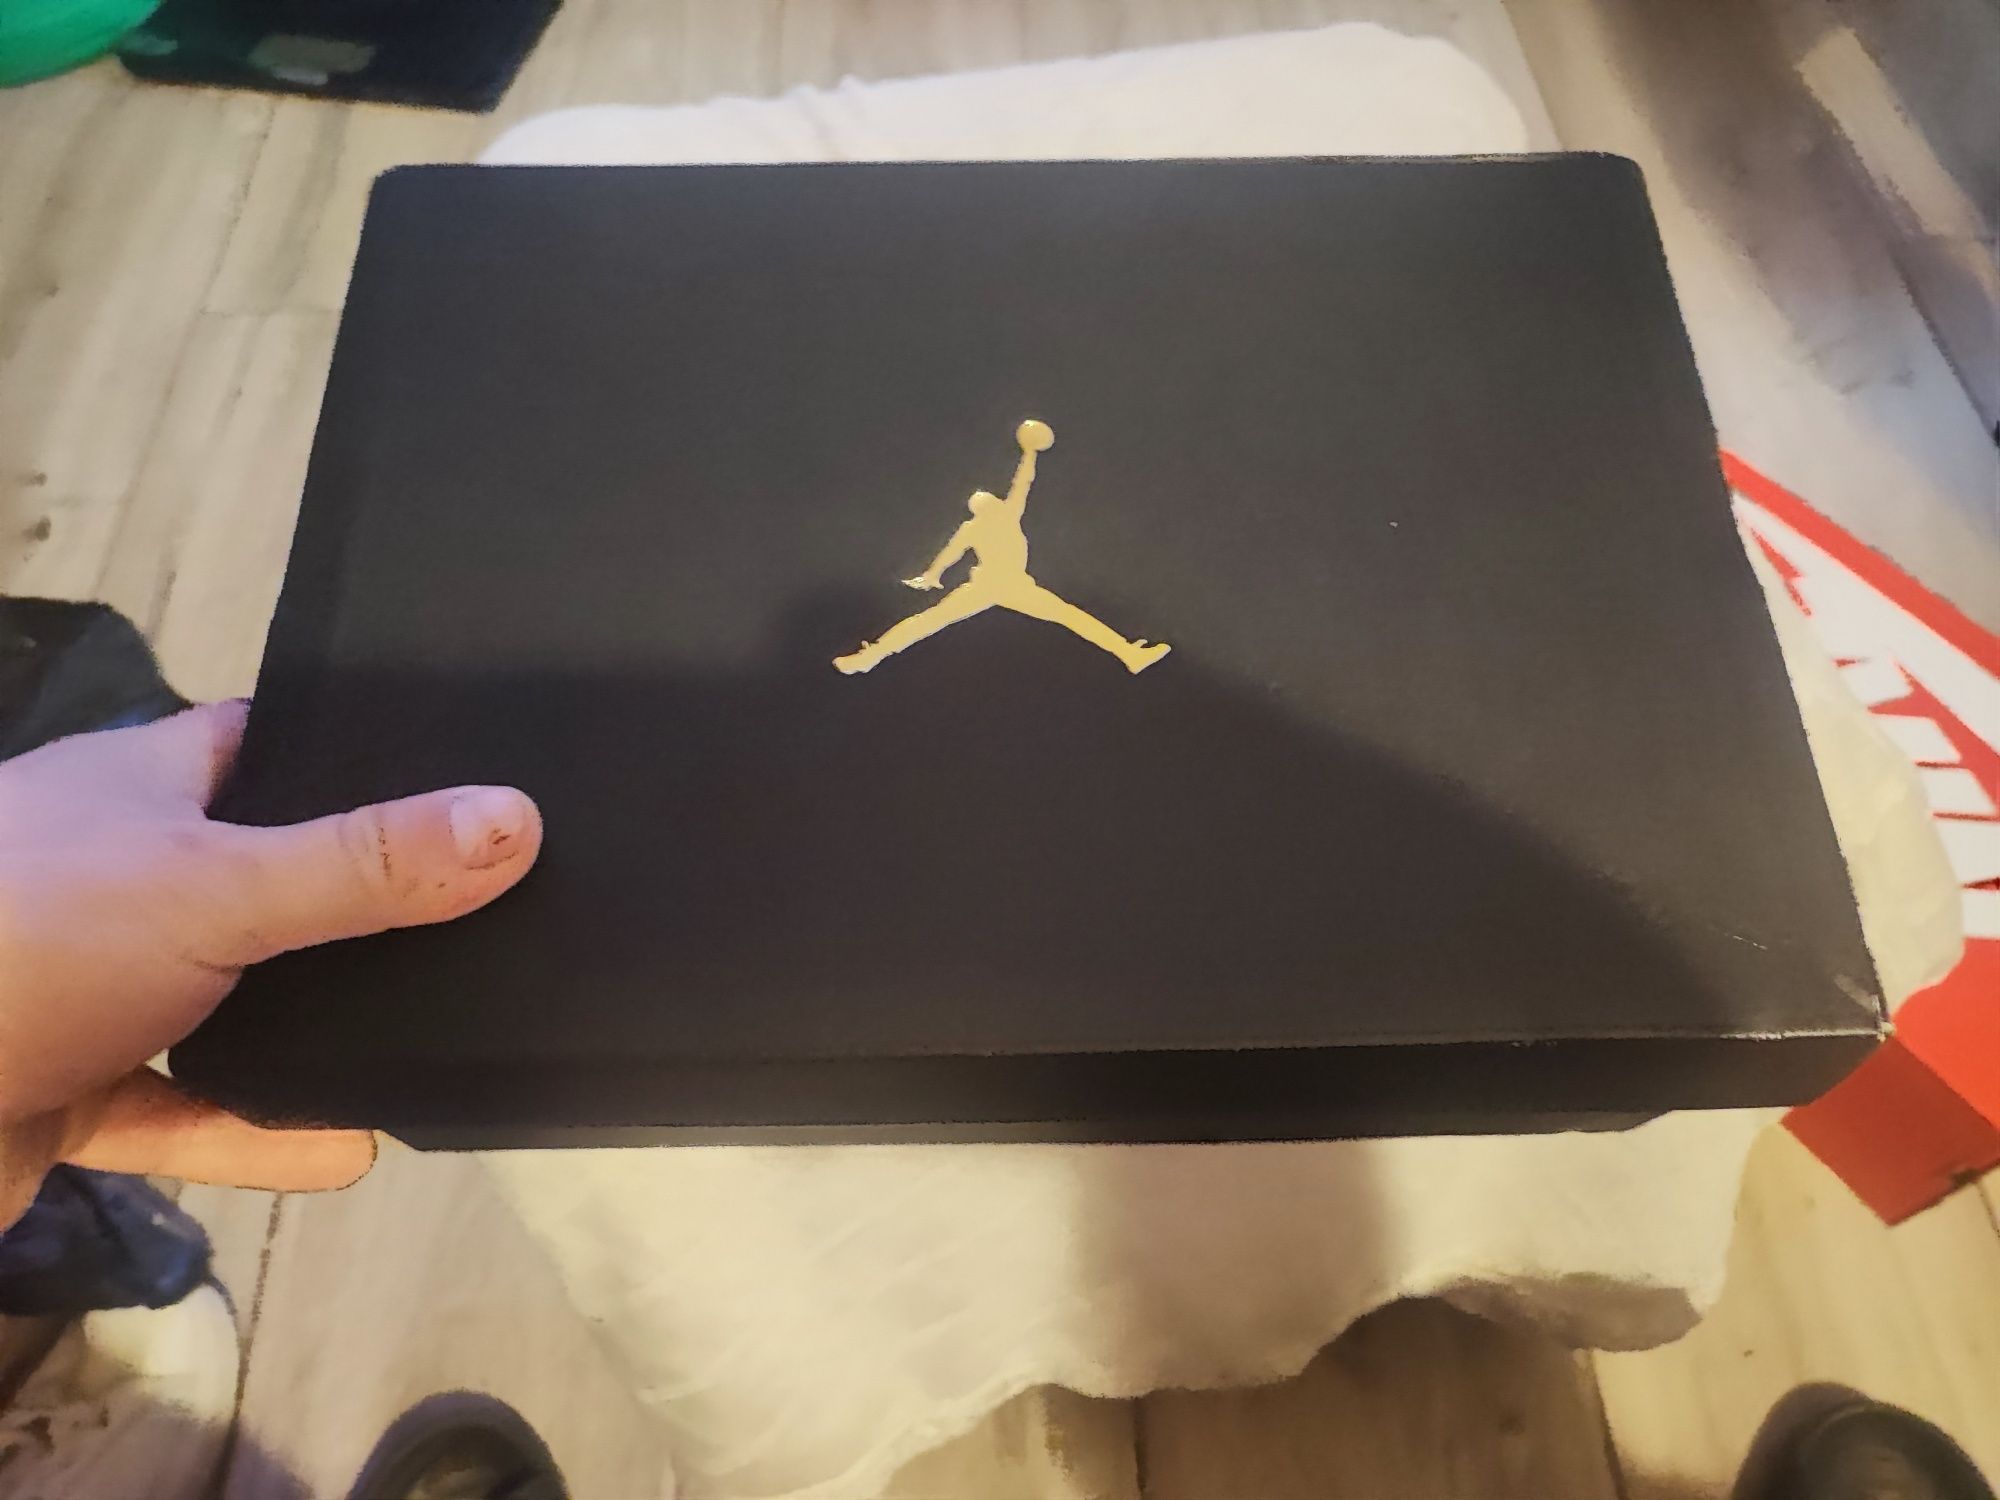 Buty Nike Air Jordan 1 LOW rozmiar 42,5 27cm